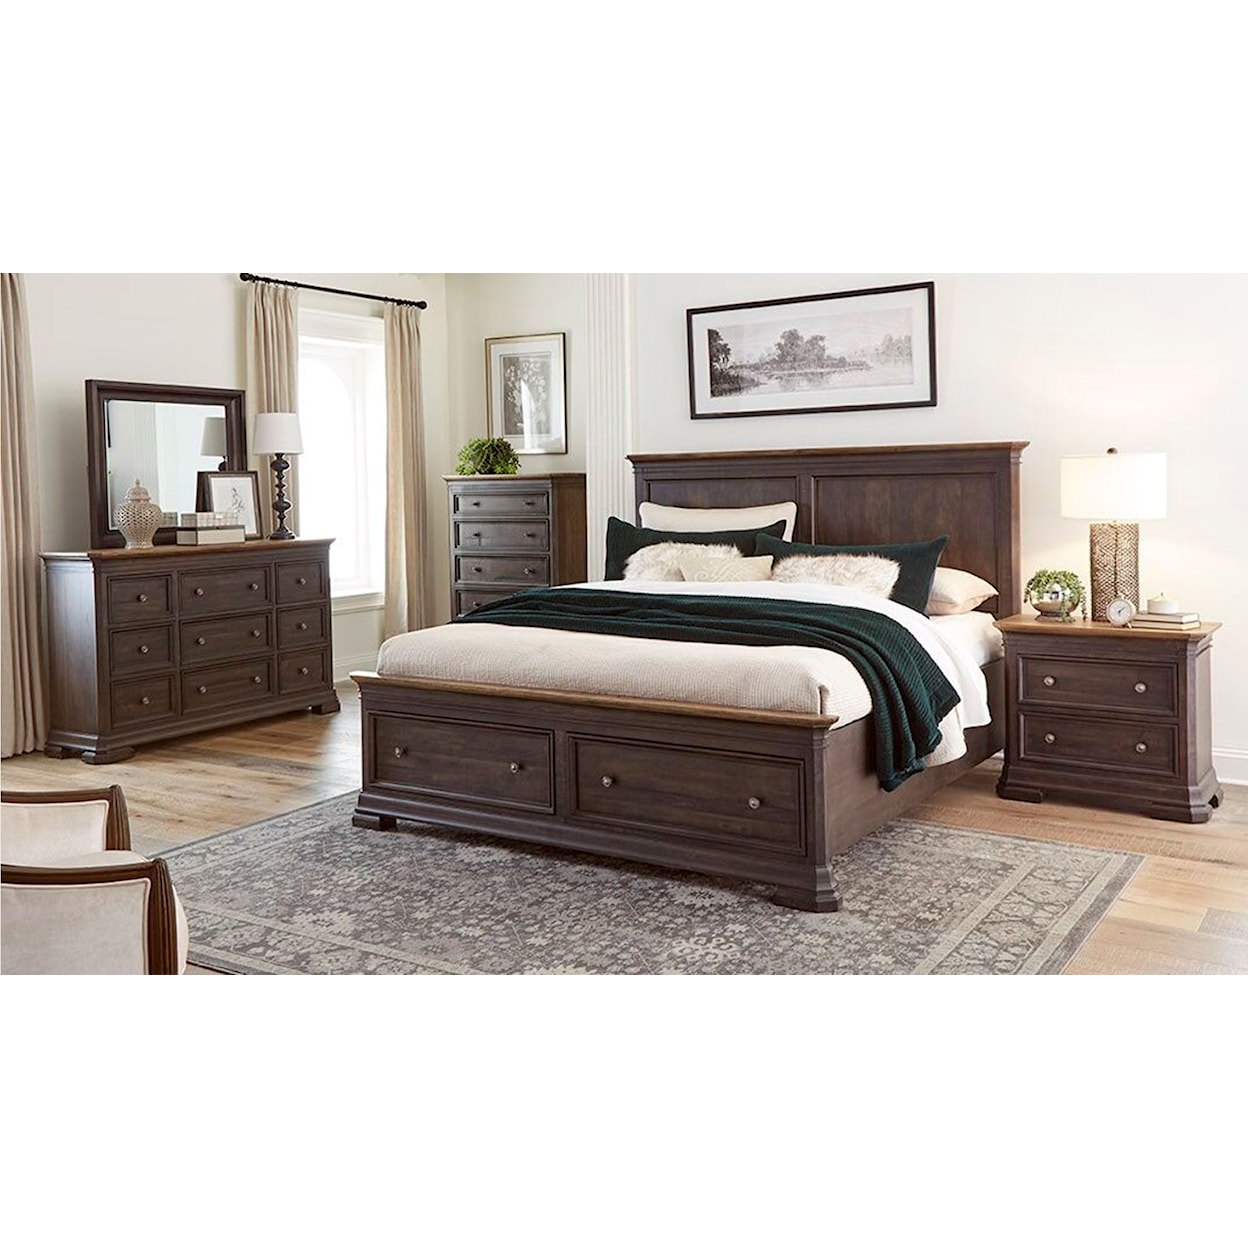 Napa Furniture Design The Grand Louie Queen Bed